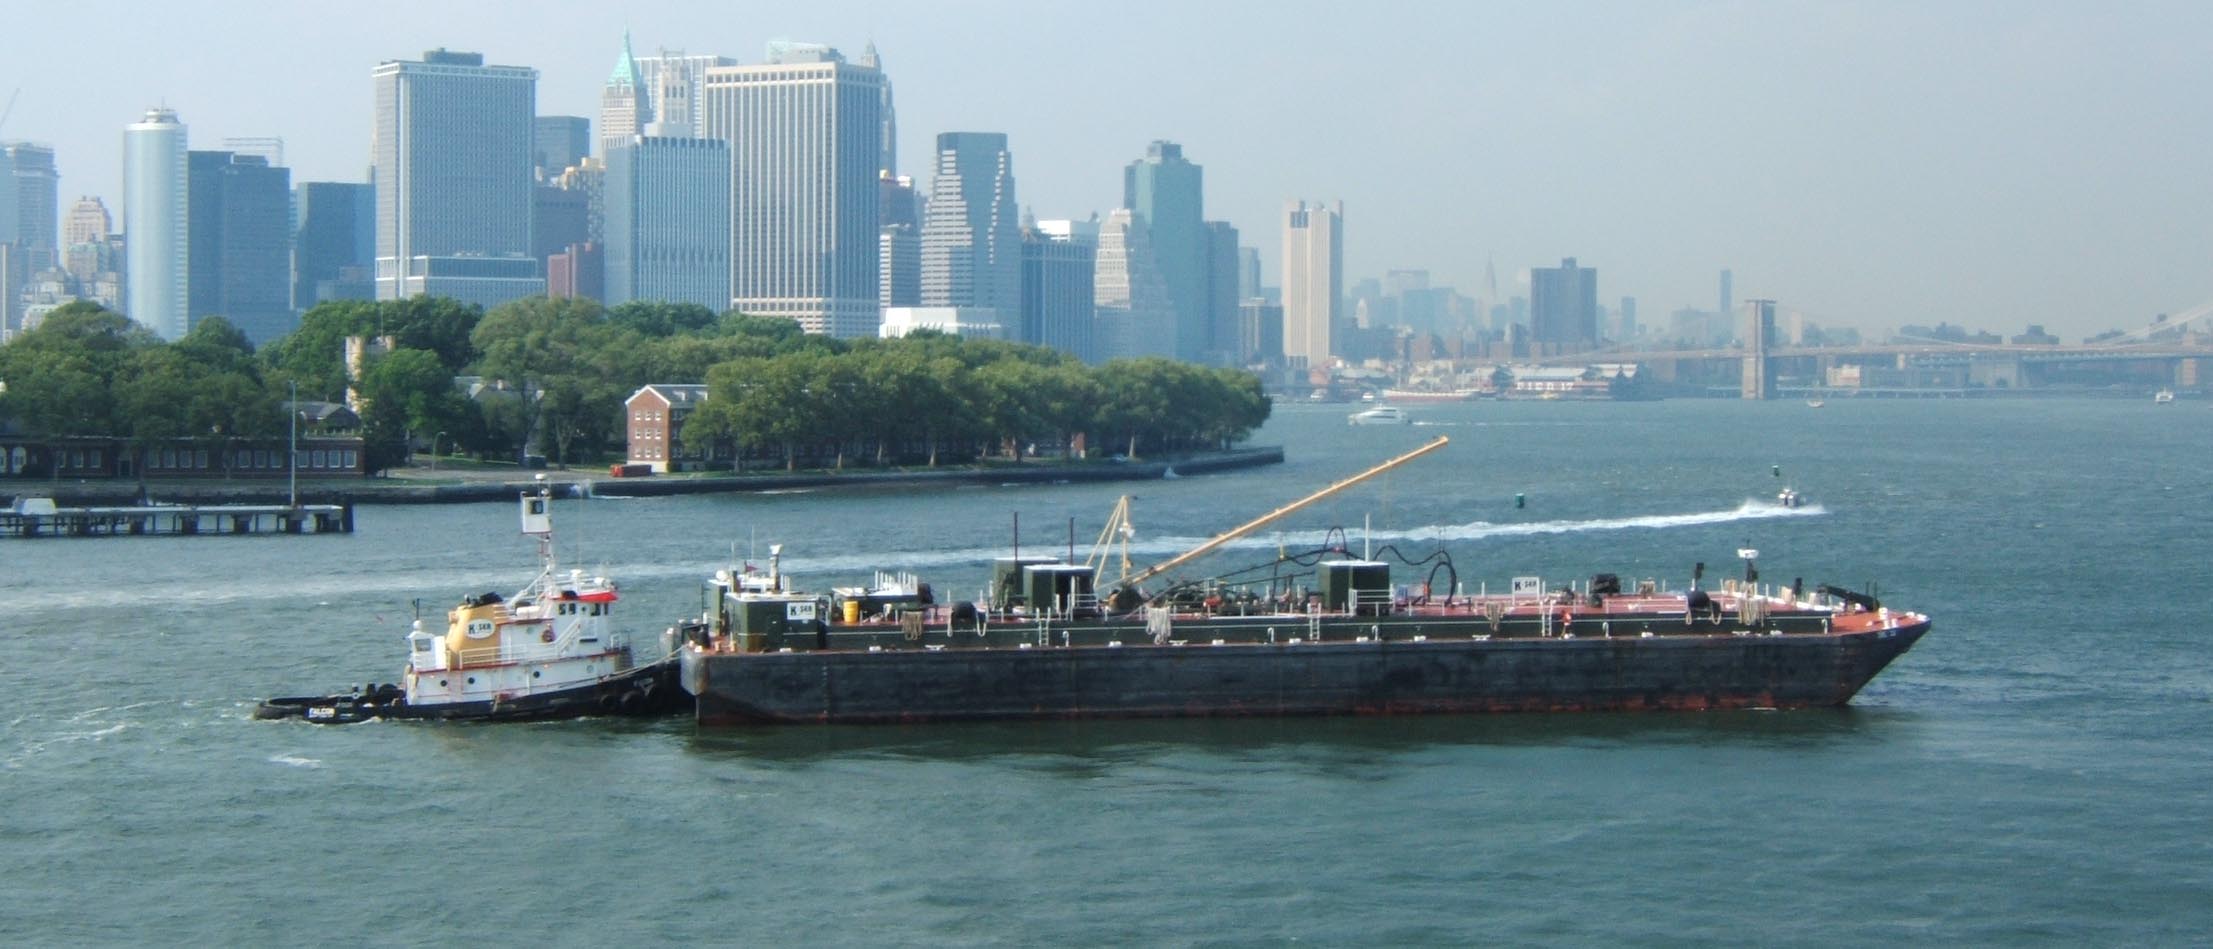 NYC Leaving tugboat